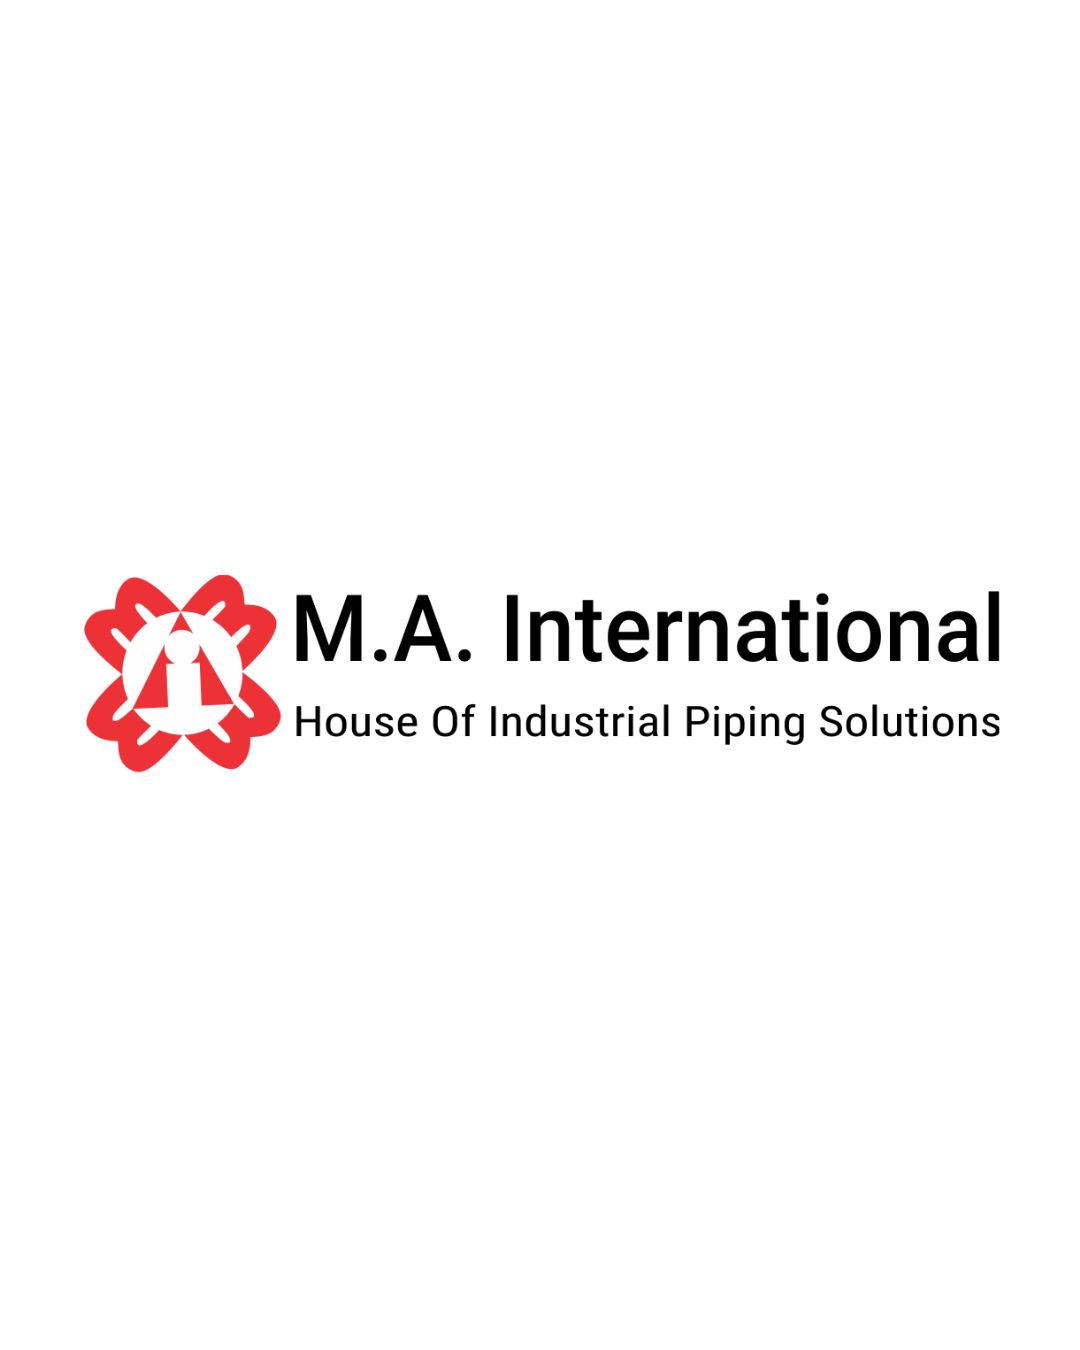 Metalloy International in Mumbai